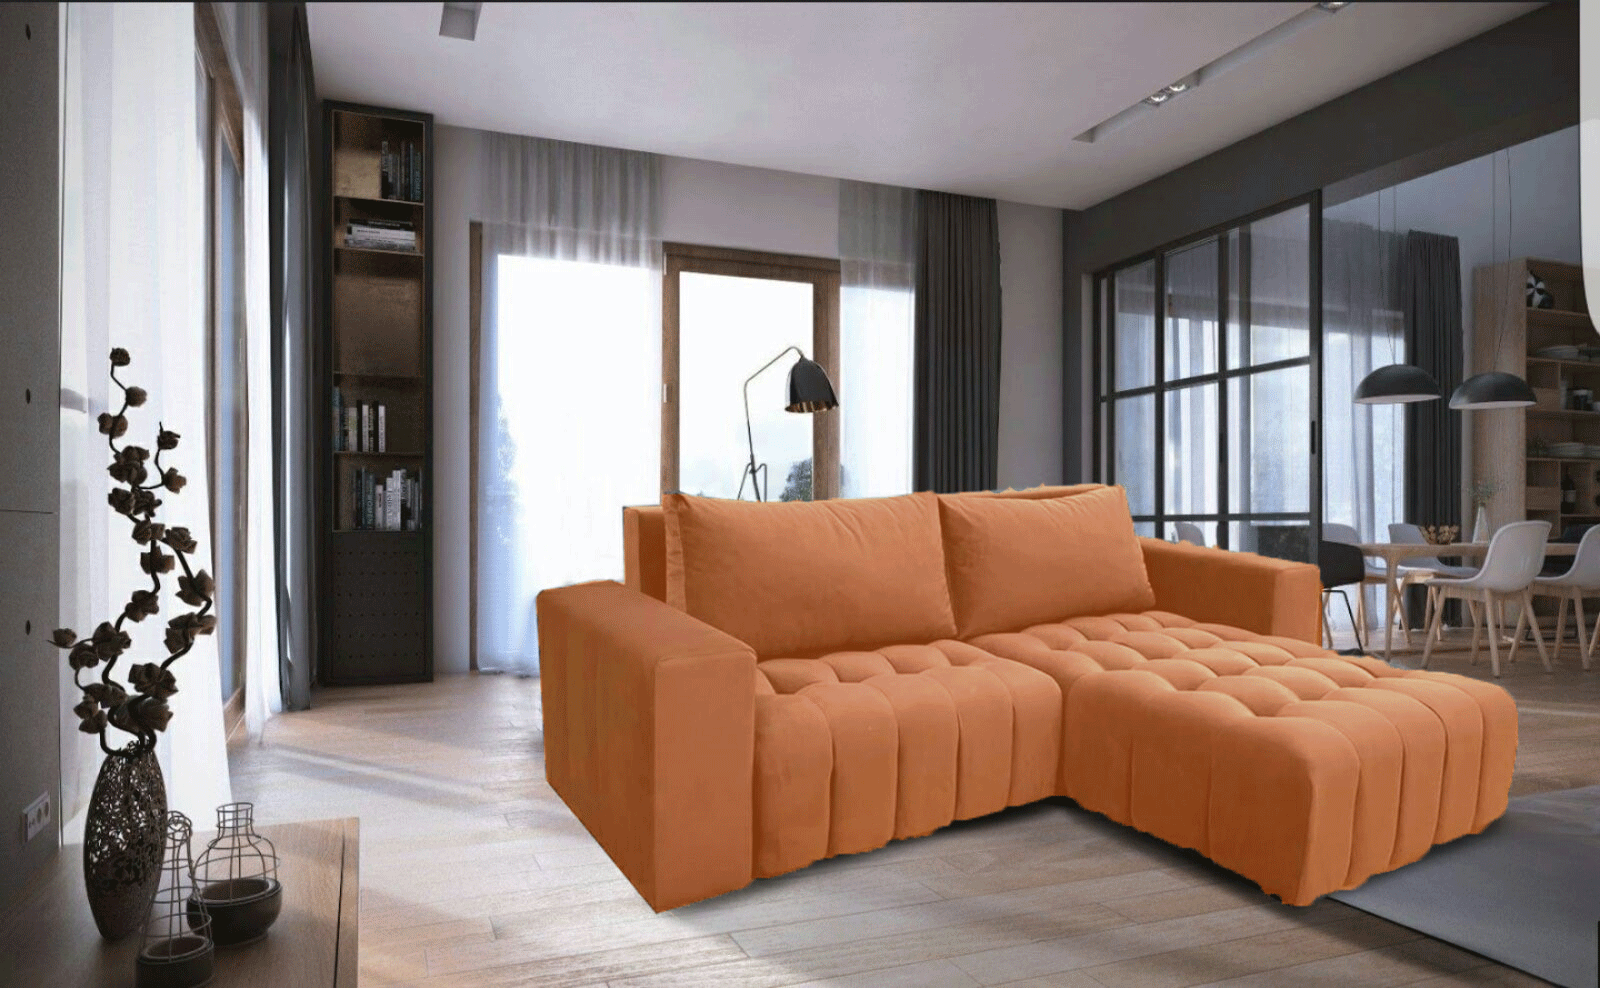 Brands ALF Capri Coffee Tables, Italy Neo sofa bed w/ storage Orange